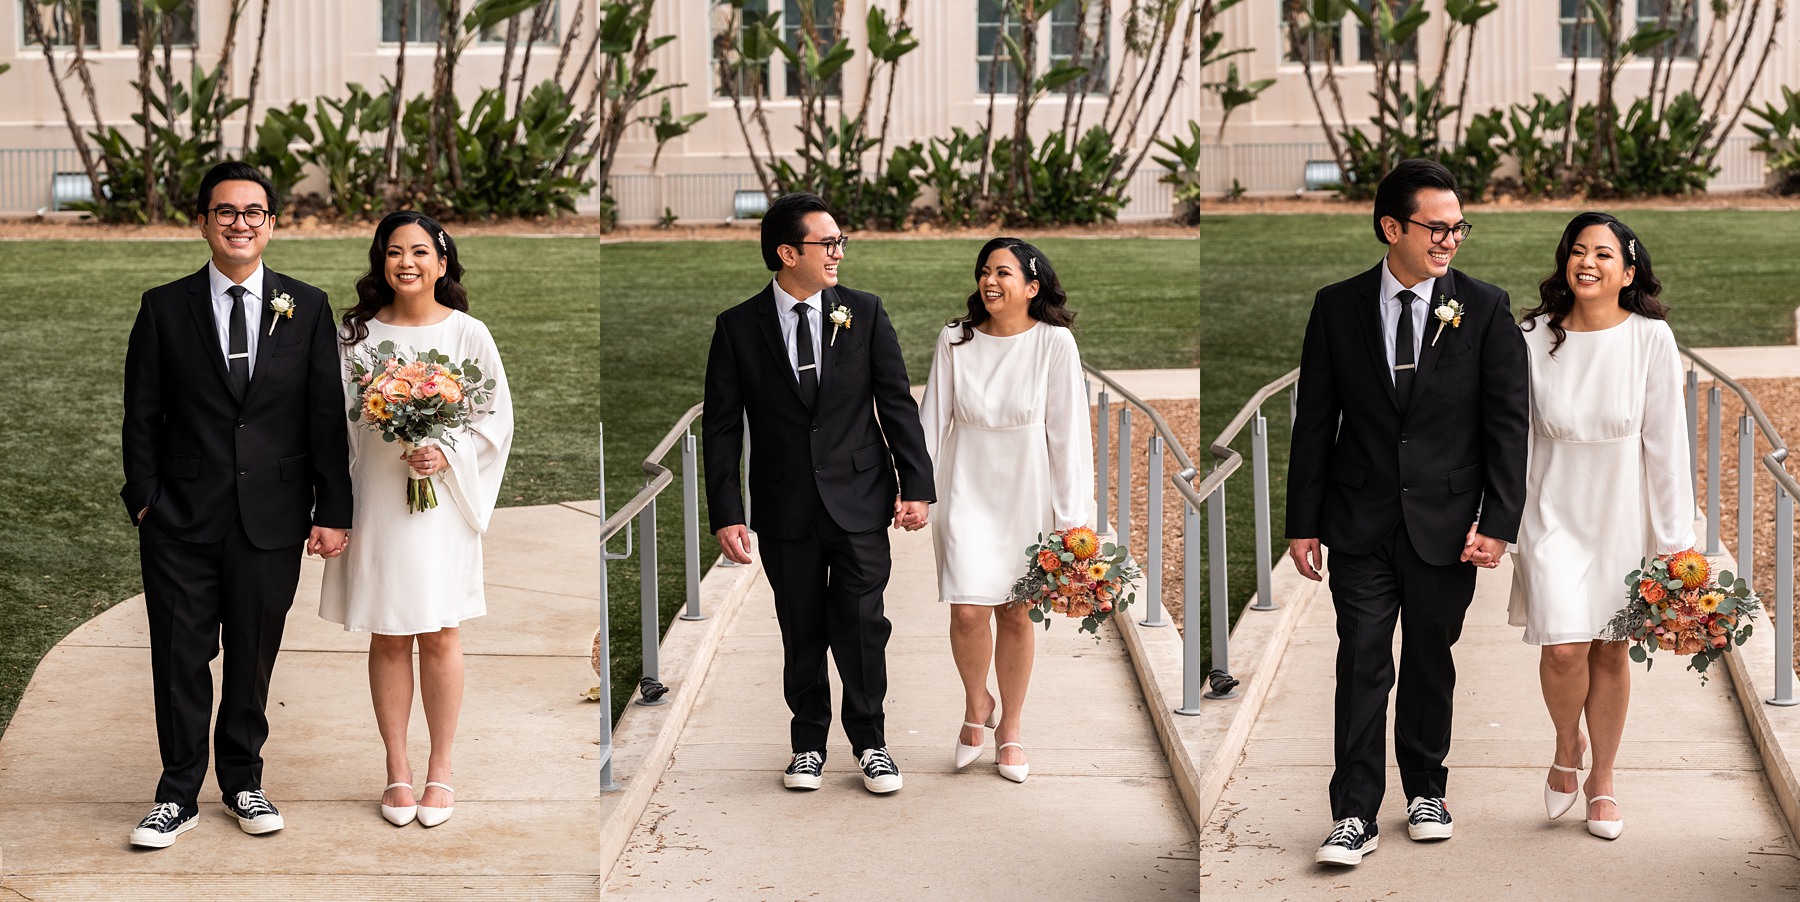 Couple at San Diego court wedding